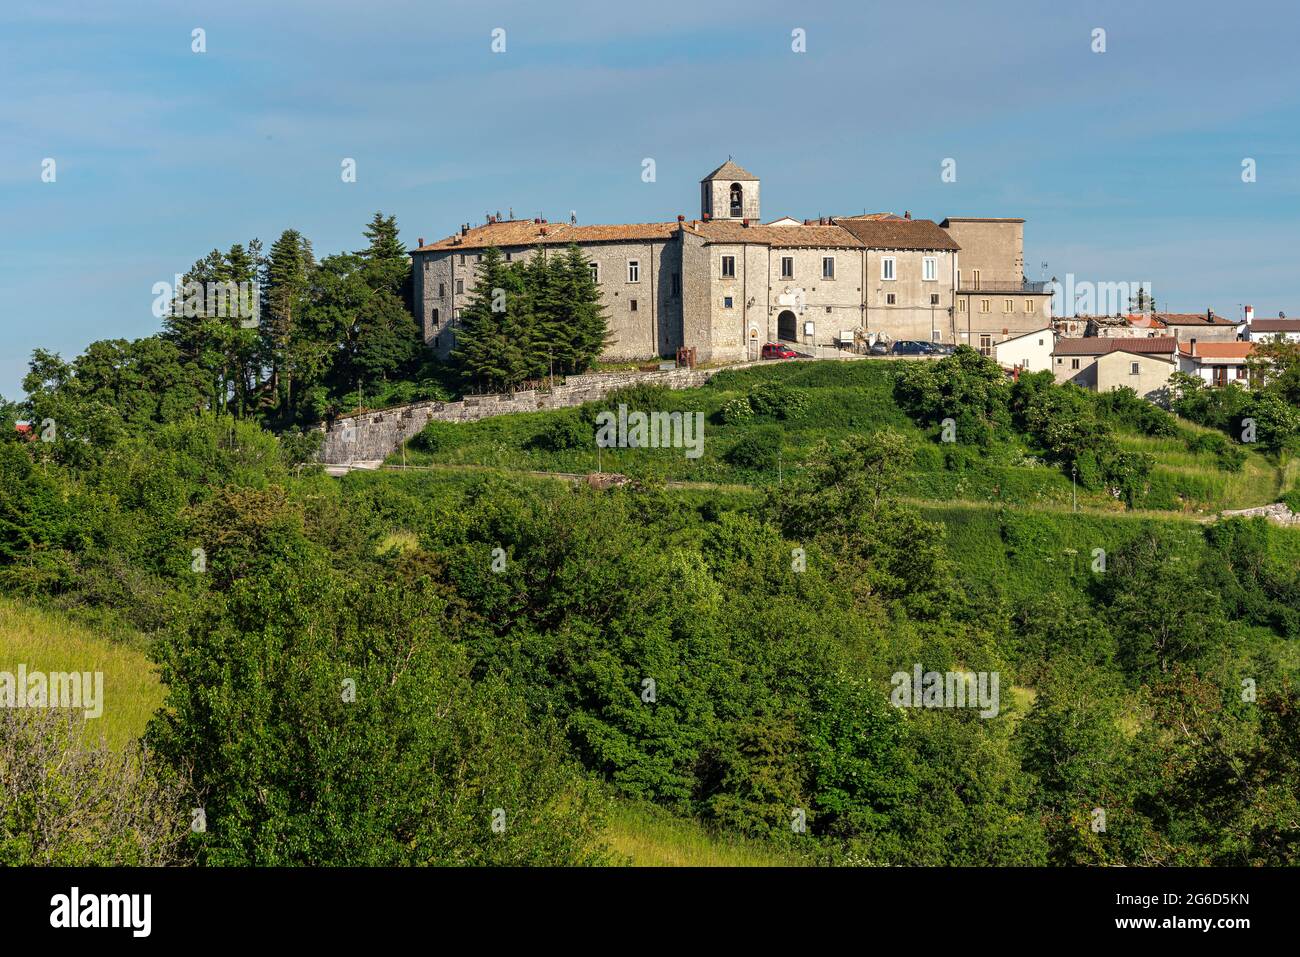 The medieval village of the town of Vastogirardi. Vastogirardi, Isernia province, Molise, Italy, Europe Stock Photo